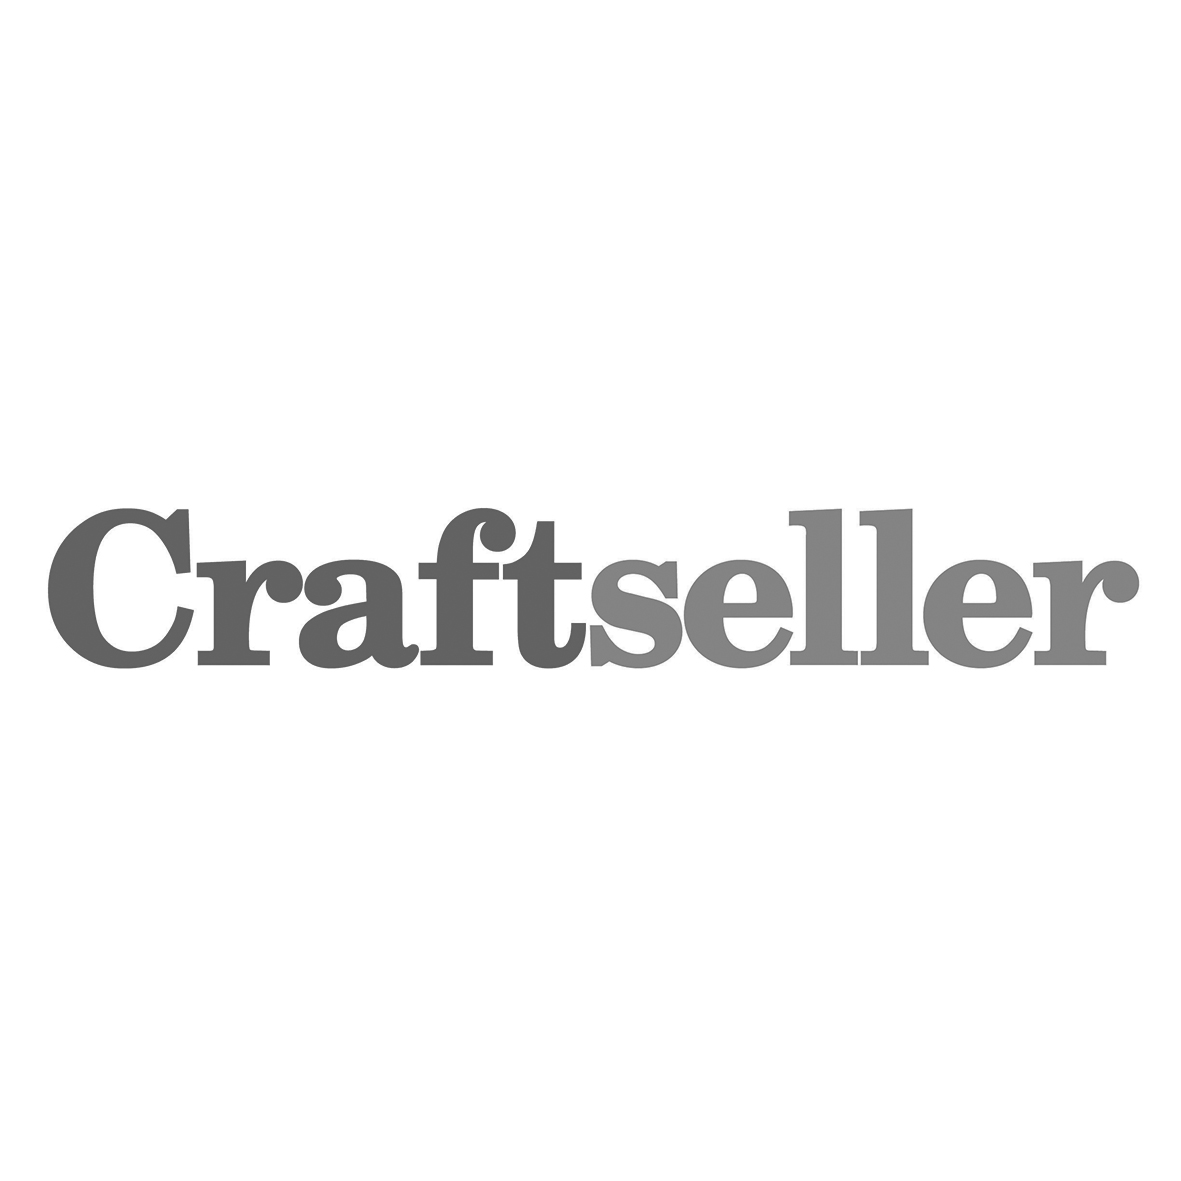 Craftseller bw.jpg